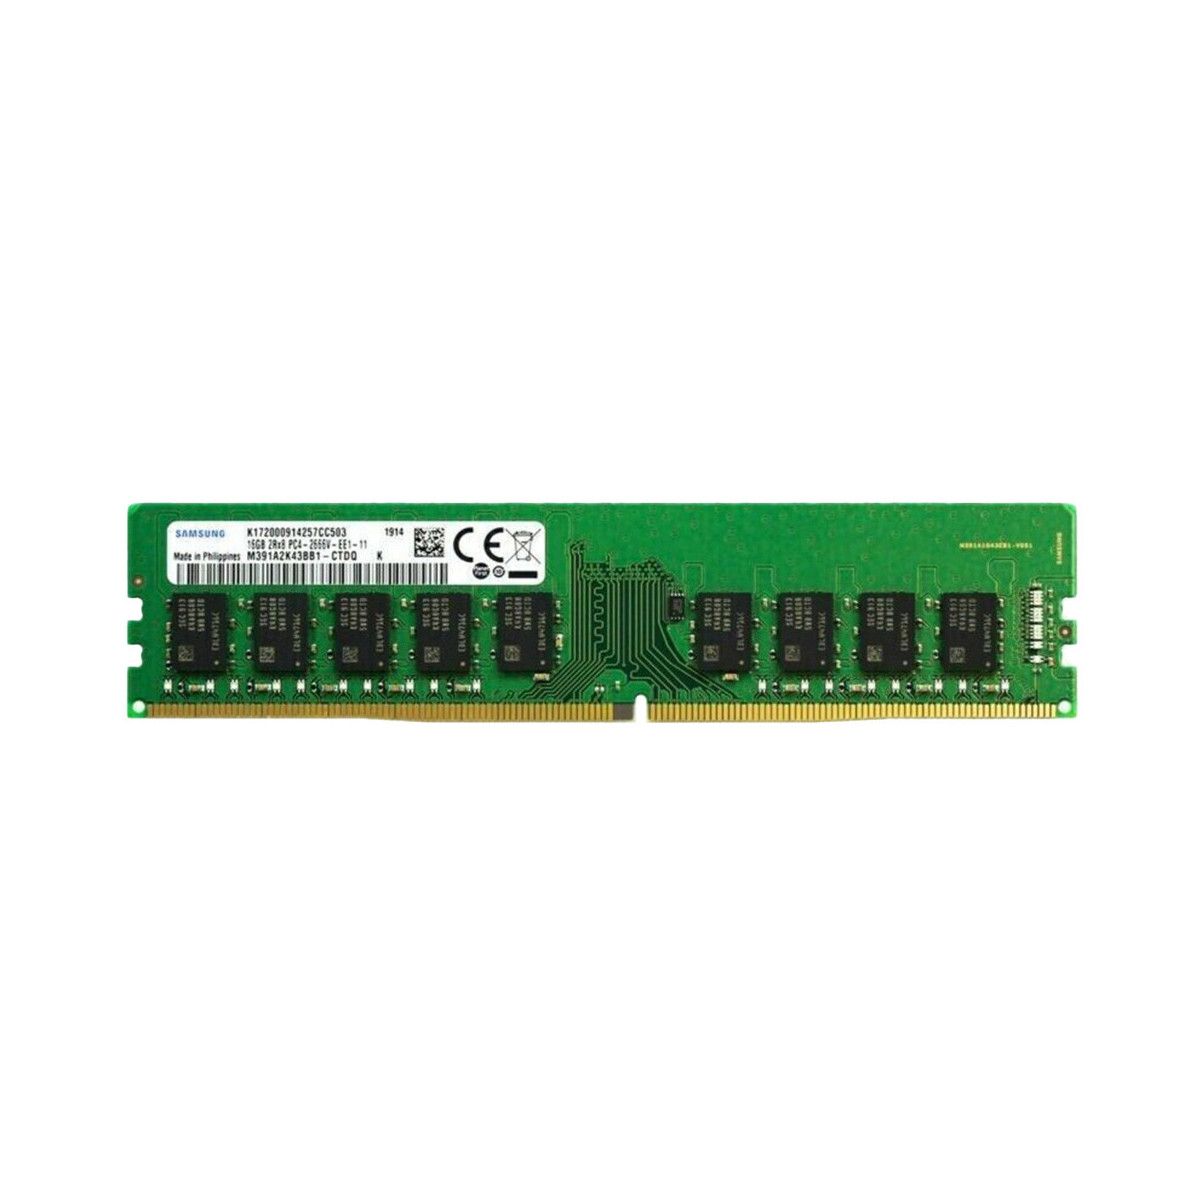 3TQ40AT-MS - Memstar 1x 16GB DDR4-2666 ECC UDIMM PC4-21300V-E